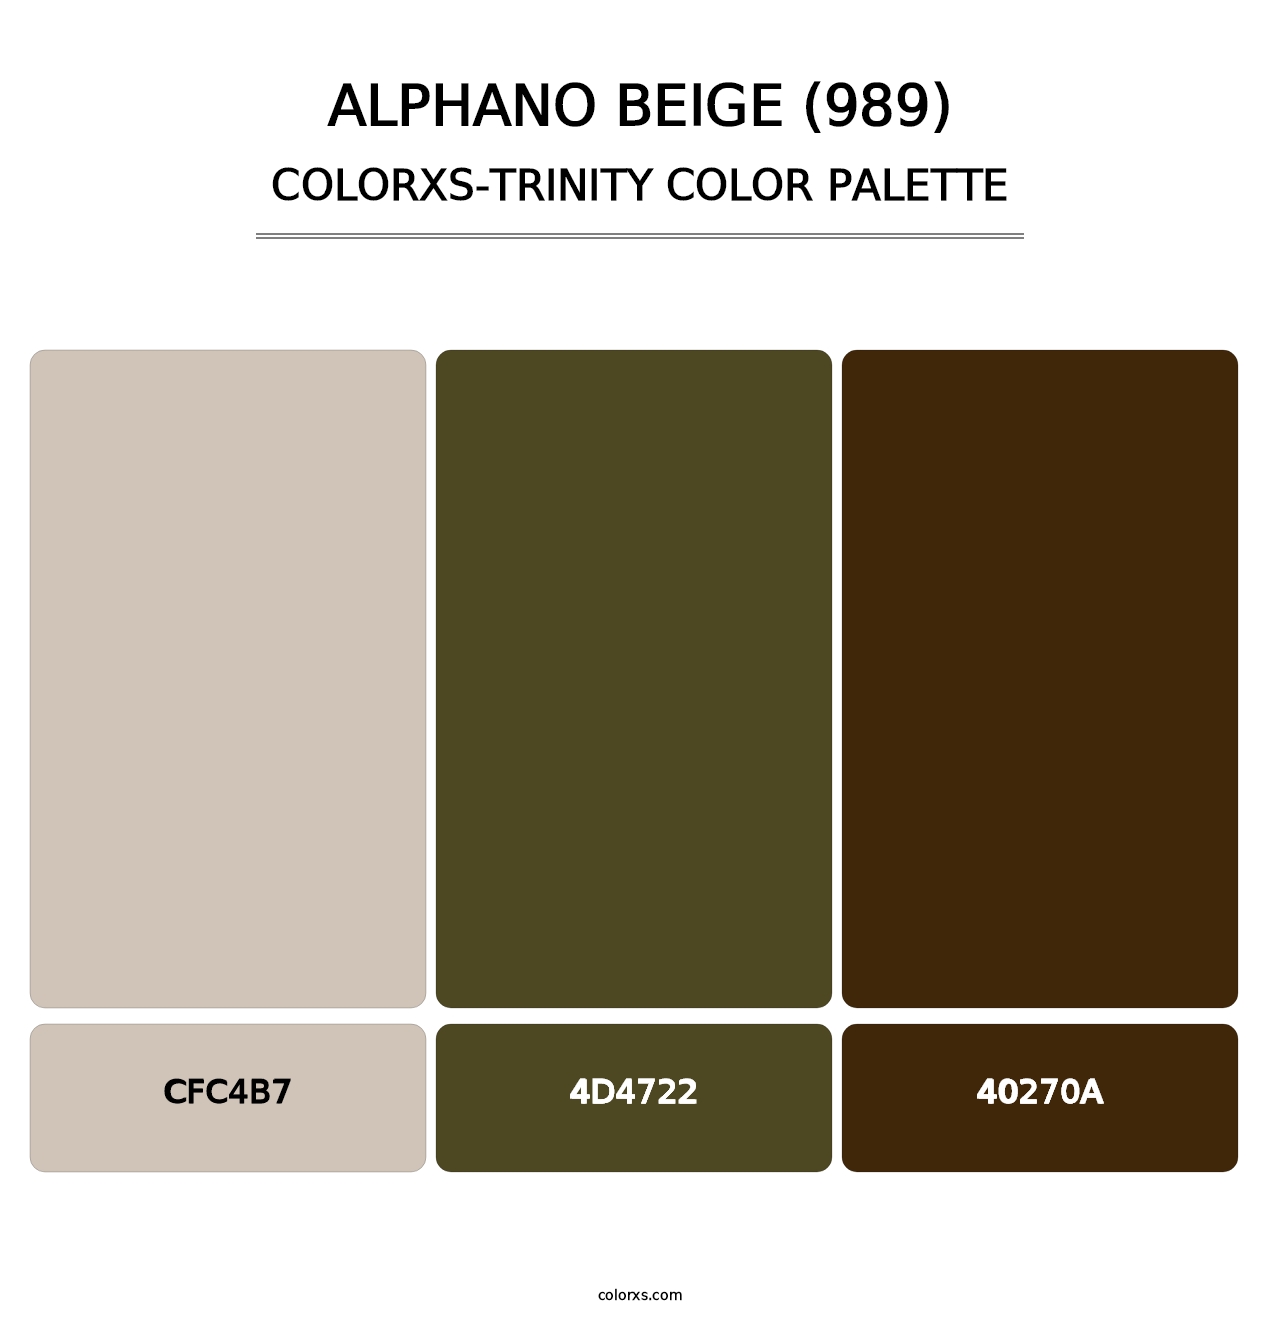 Alphano Beige (989) - Colorxs Trinity Palette